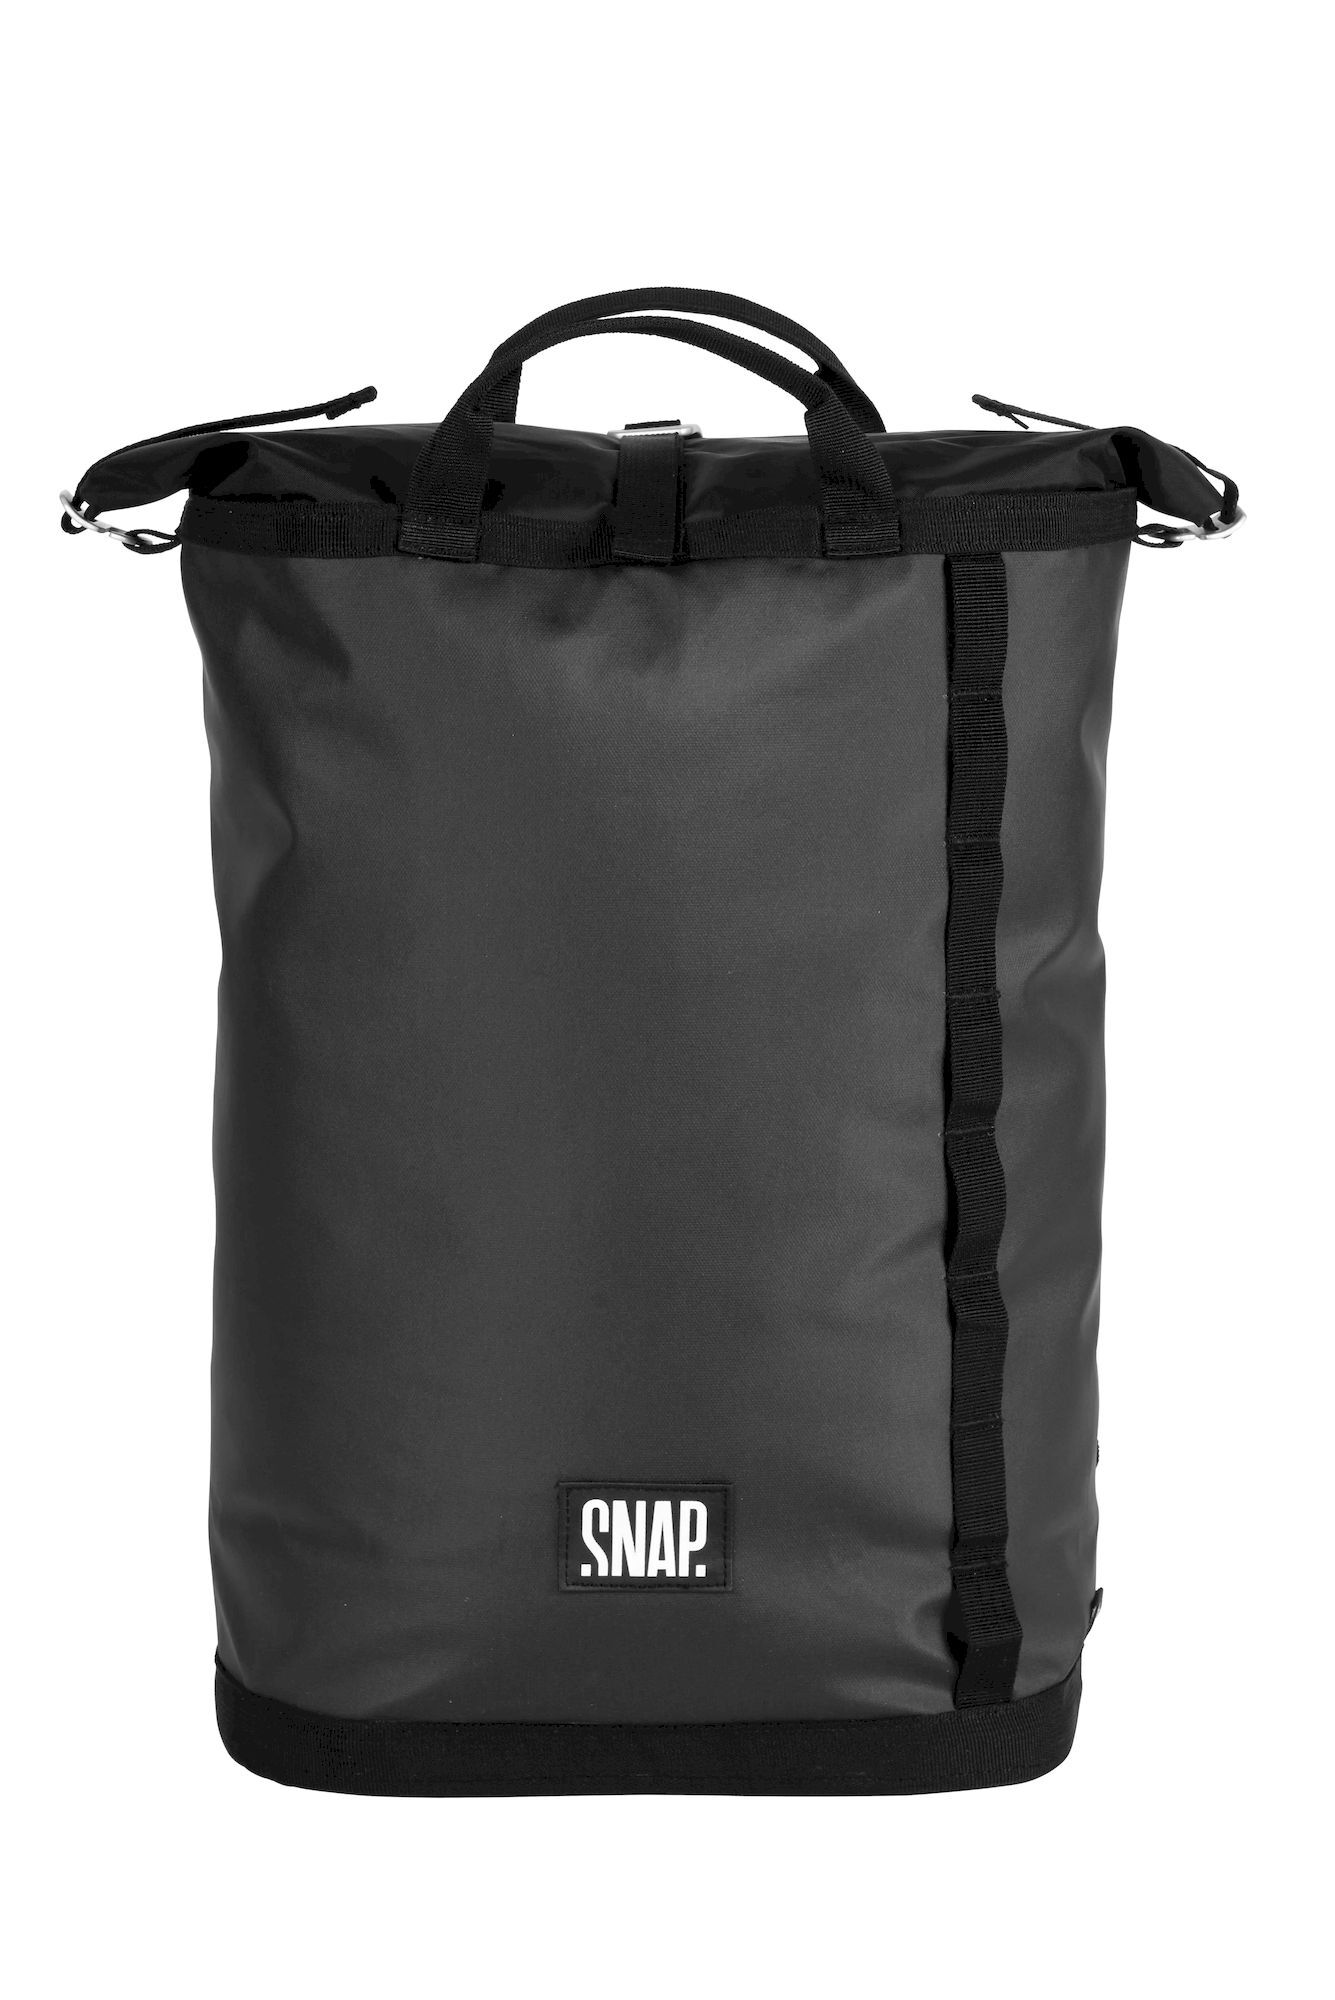 Snap Grab - Plecak wspinaczkowy | Hardloop